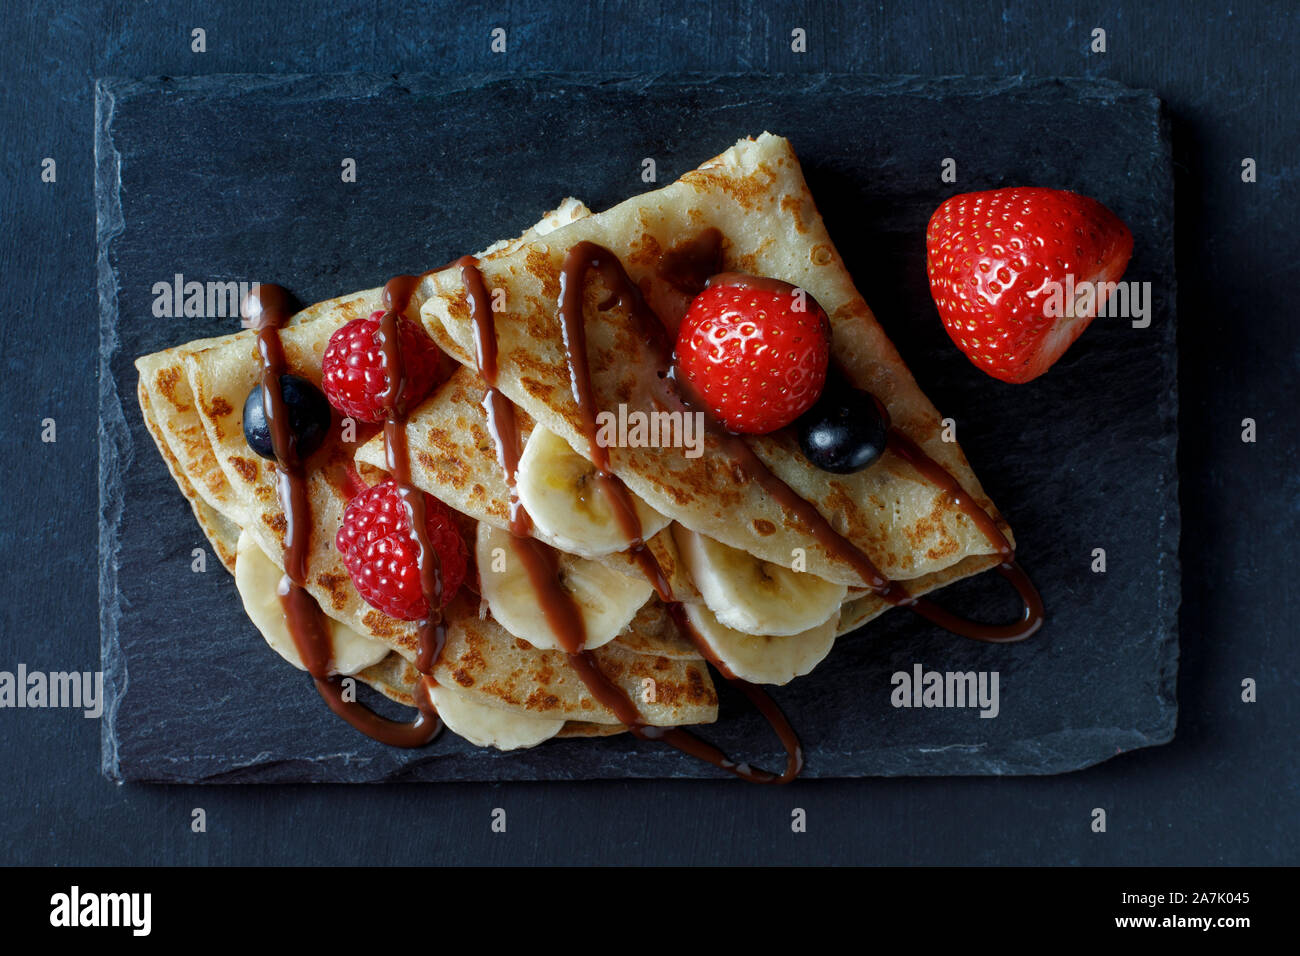 Crepe with banana, strawberry and chocolate Stock Photo - Alamy